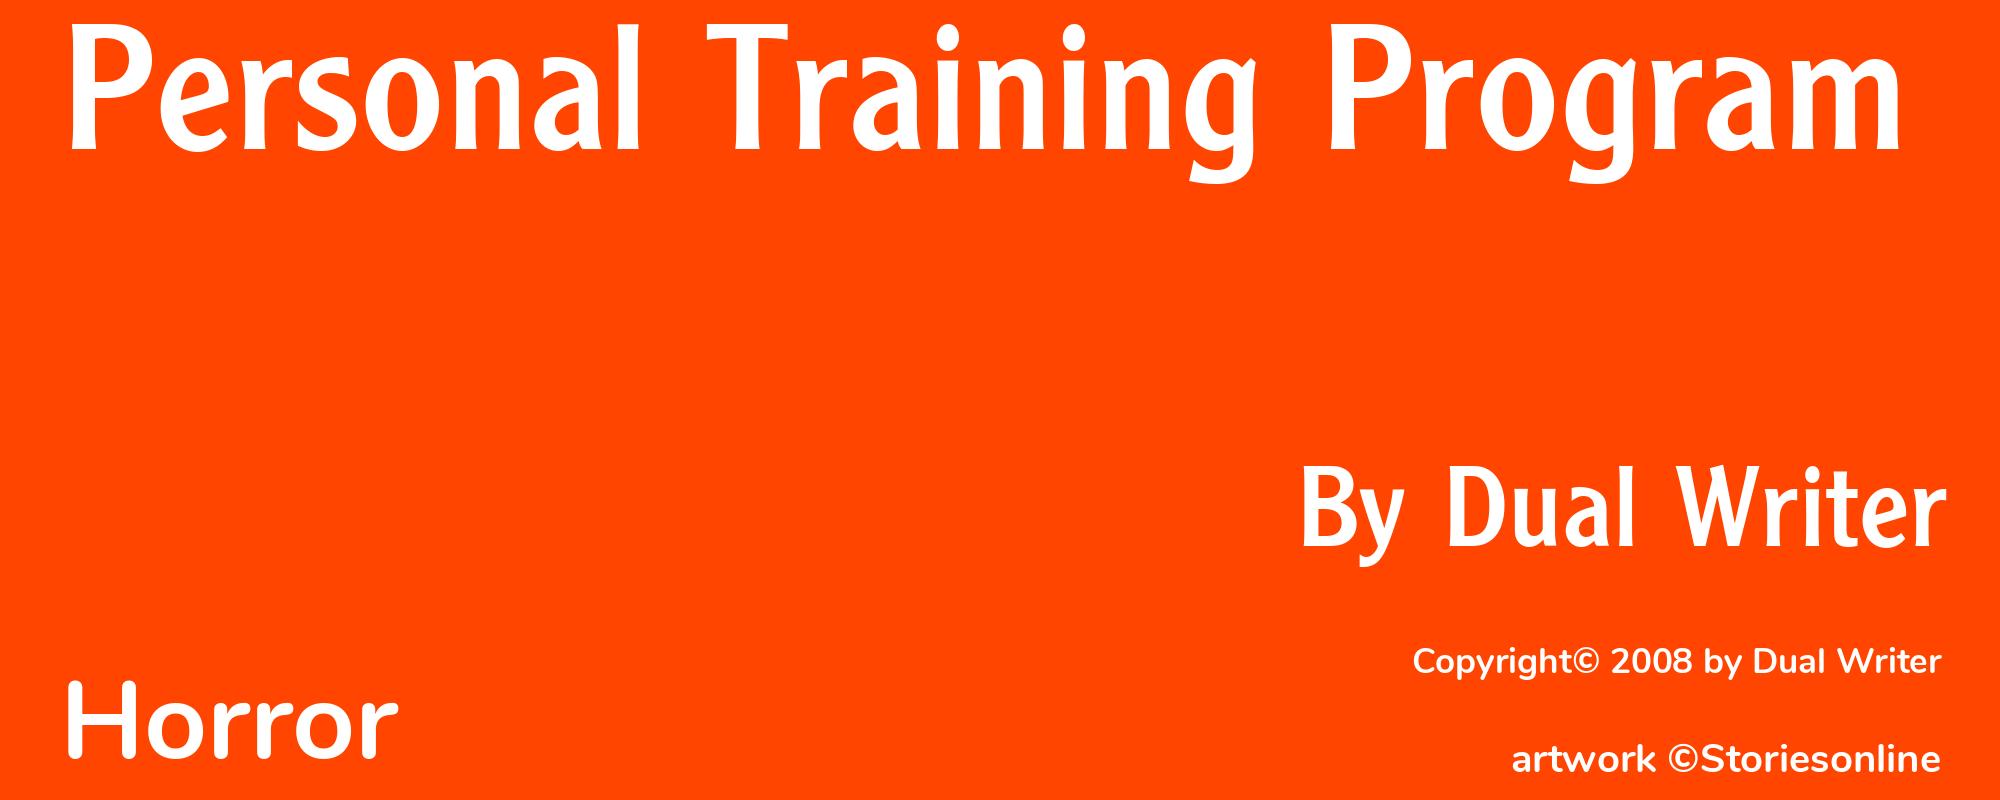 Personal Training Program - Cover